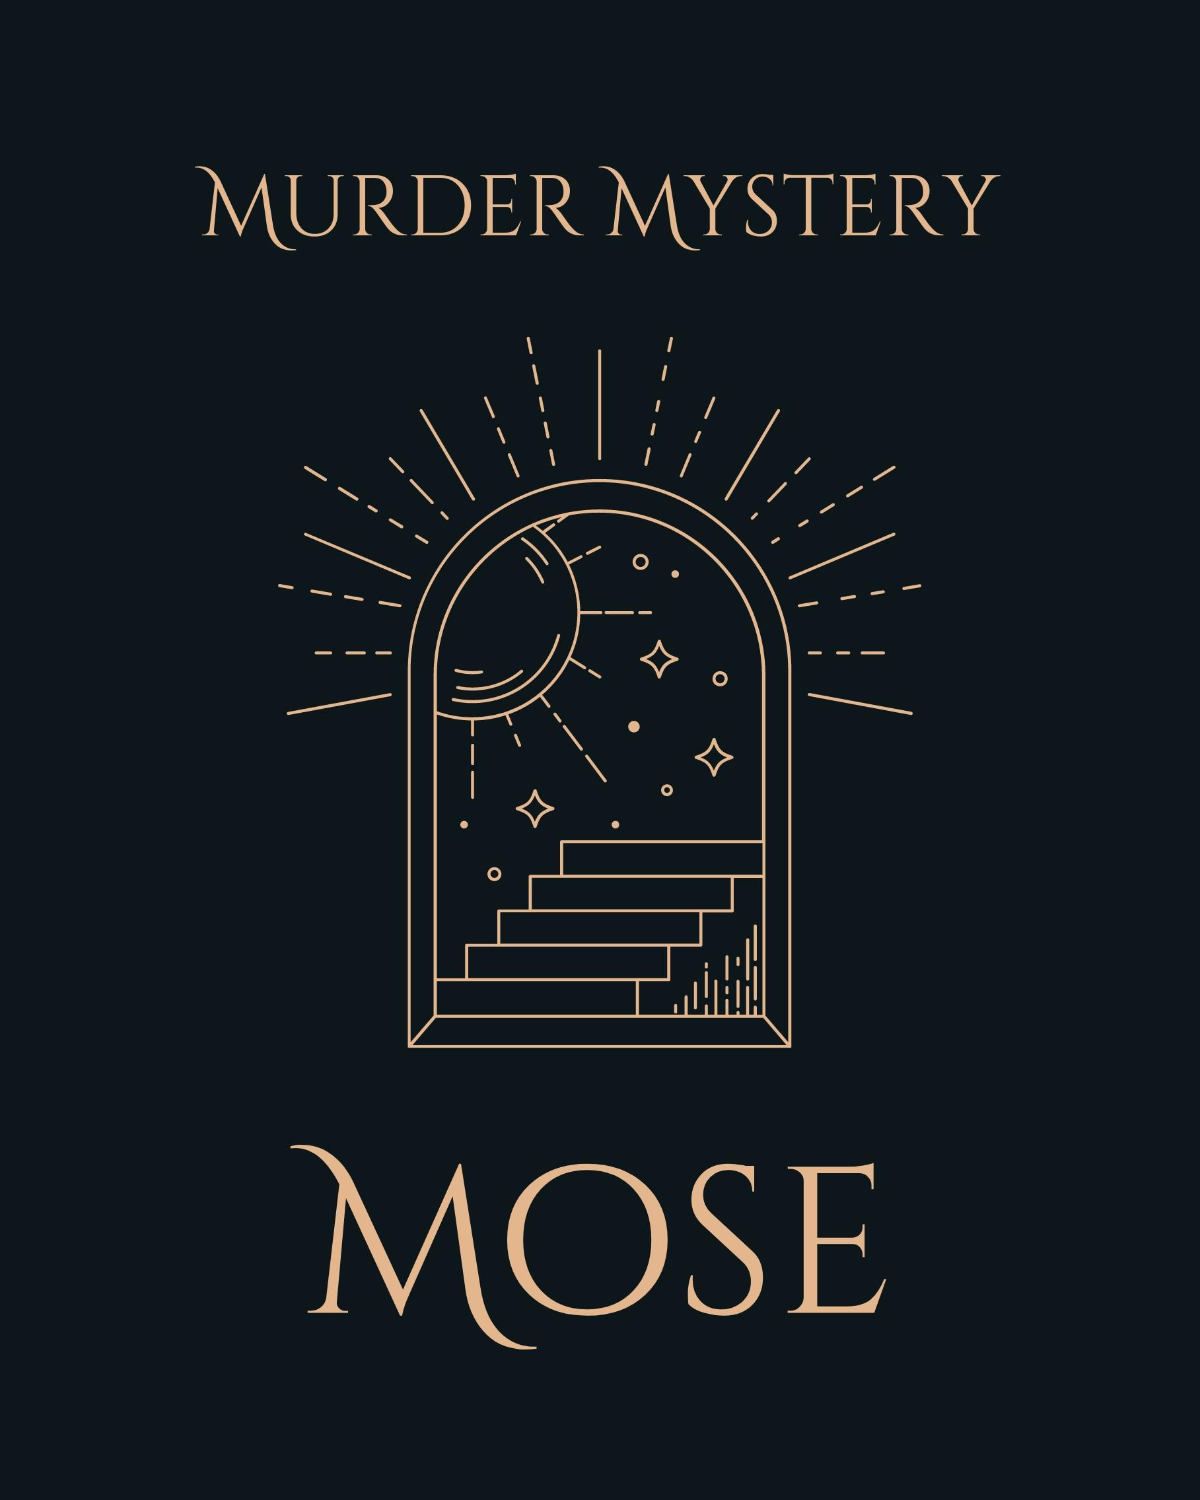 Murder Mystery - Mose